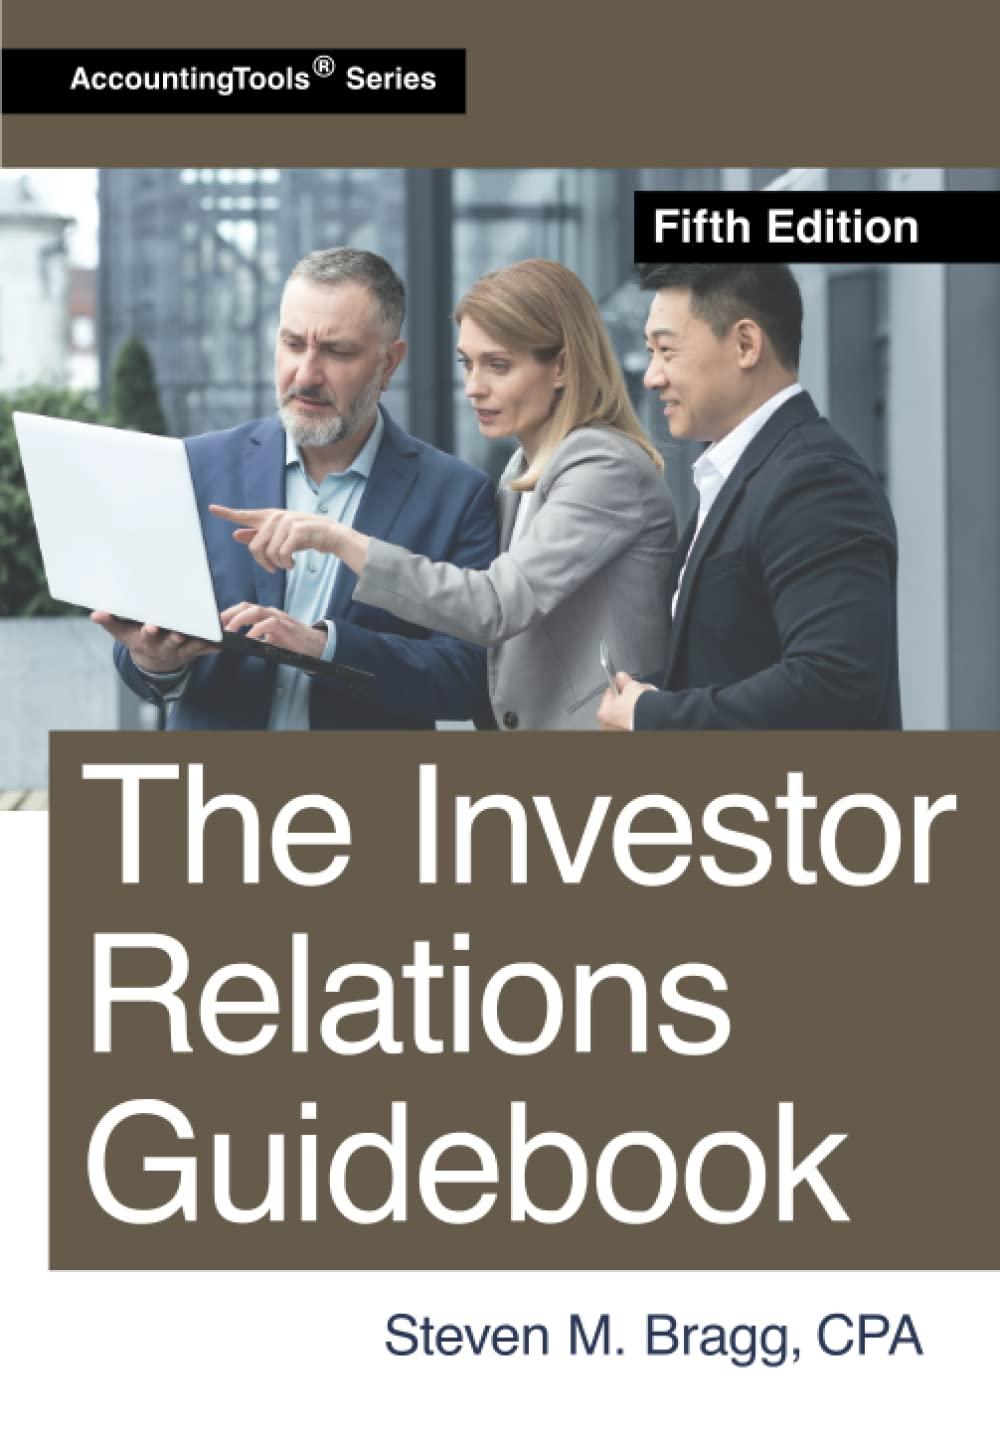 The Investor Relations Guidebook